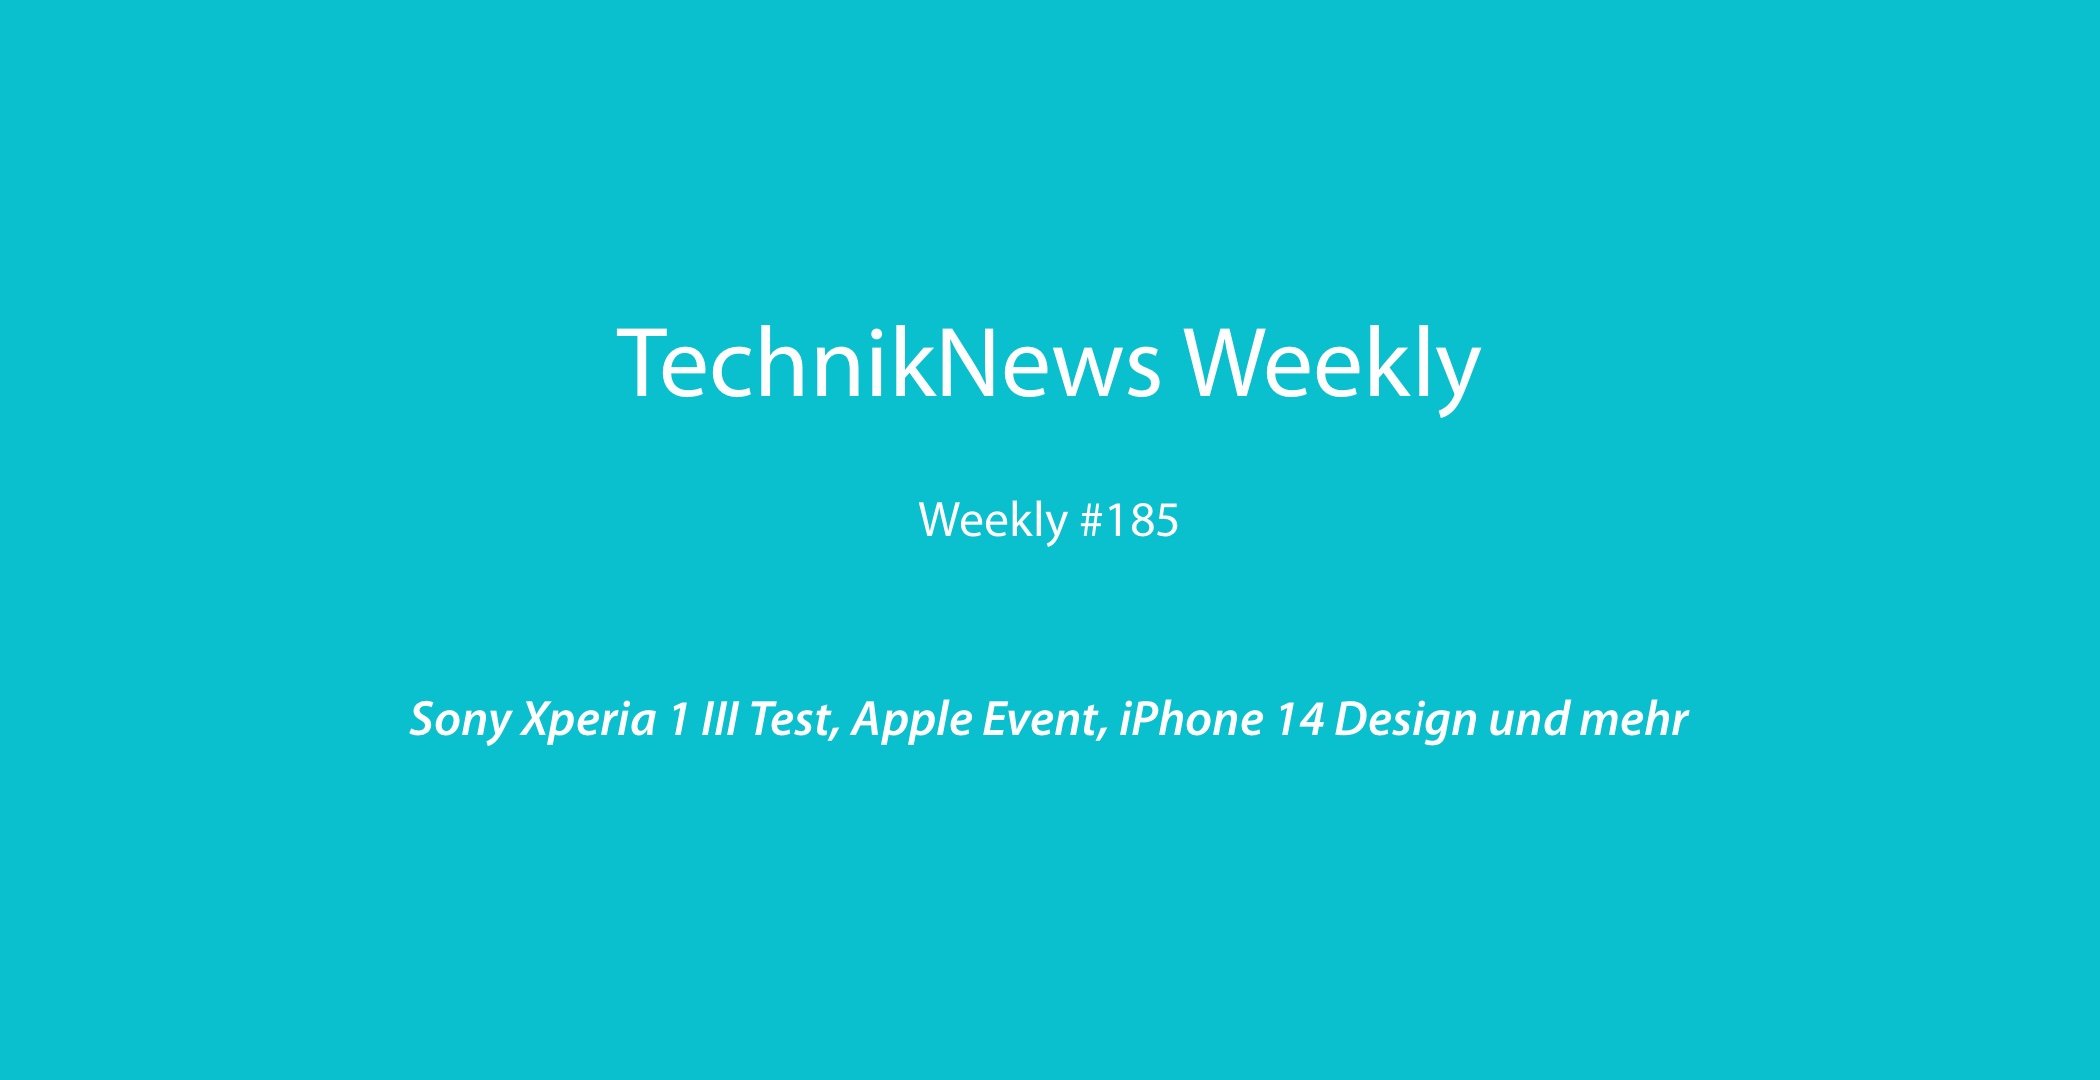 TechnikNews Weekly 185